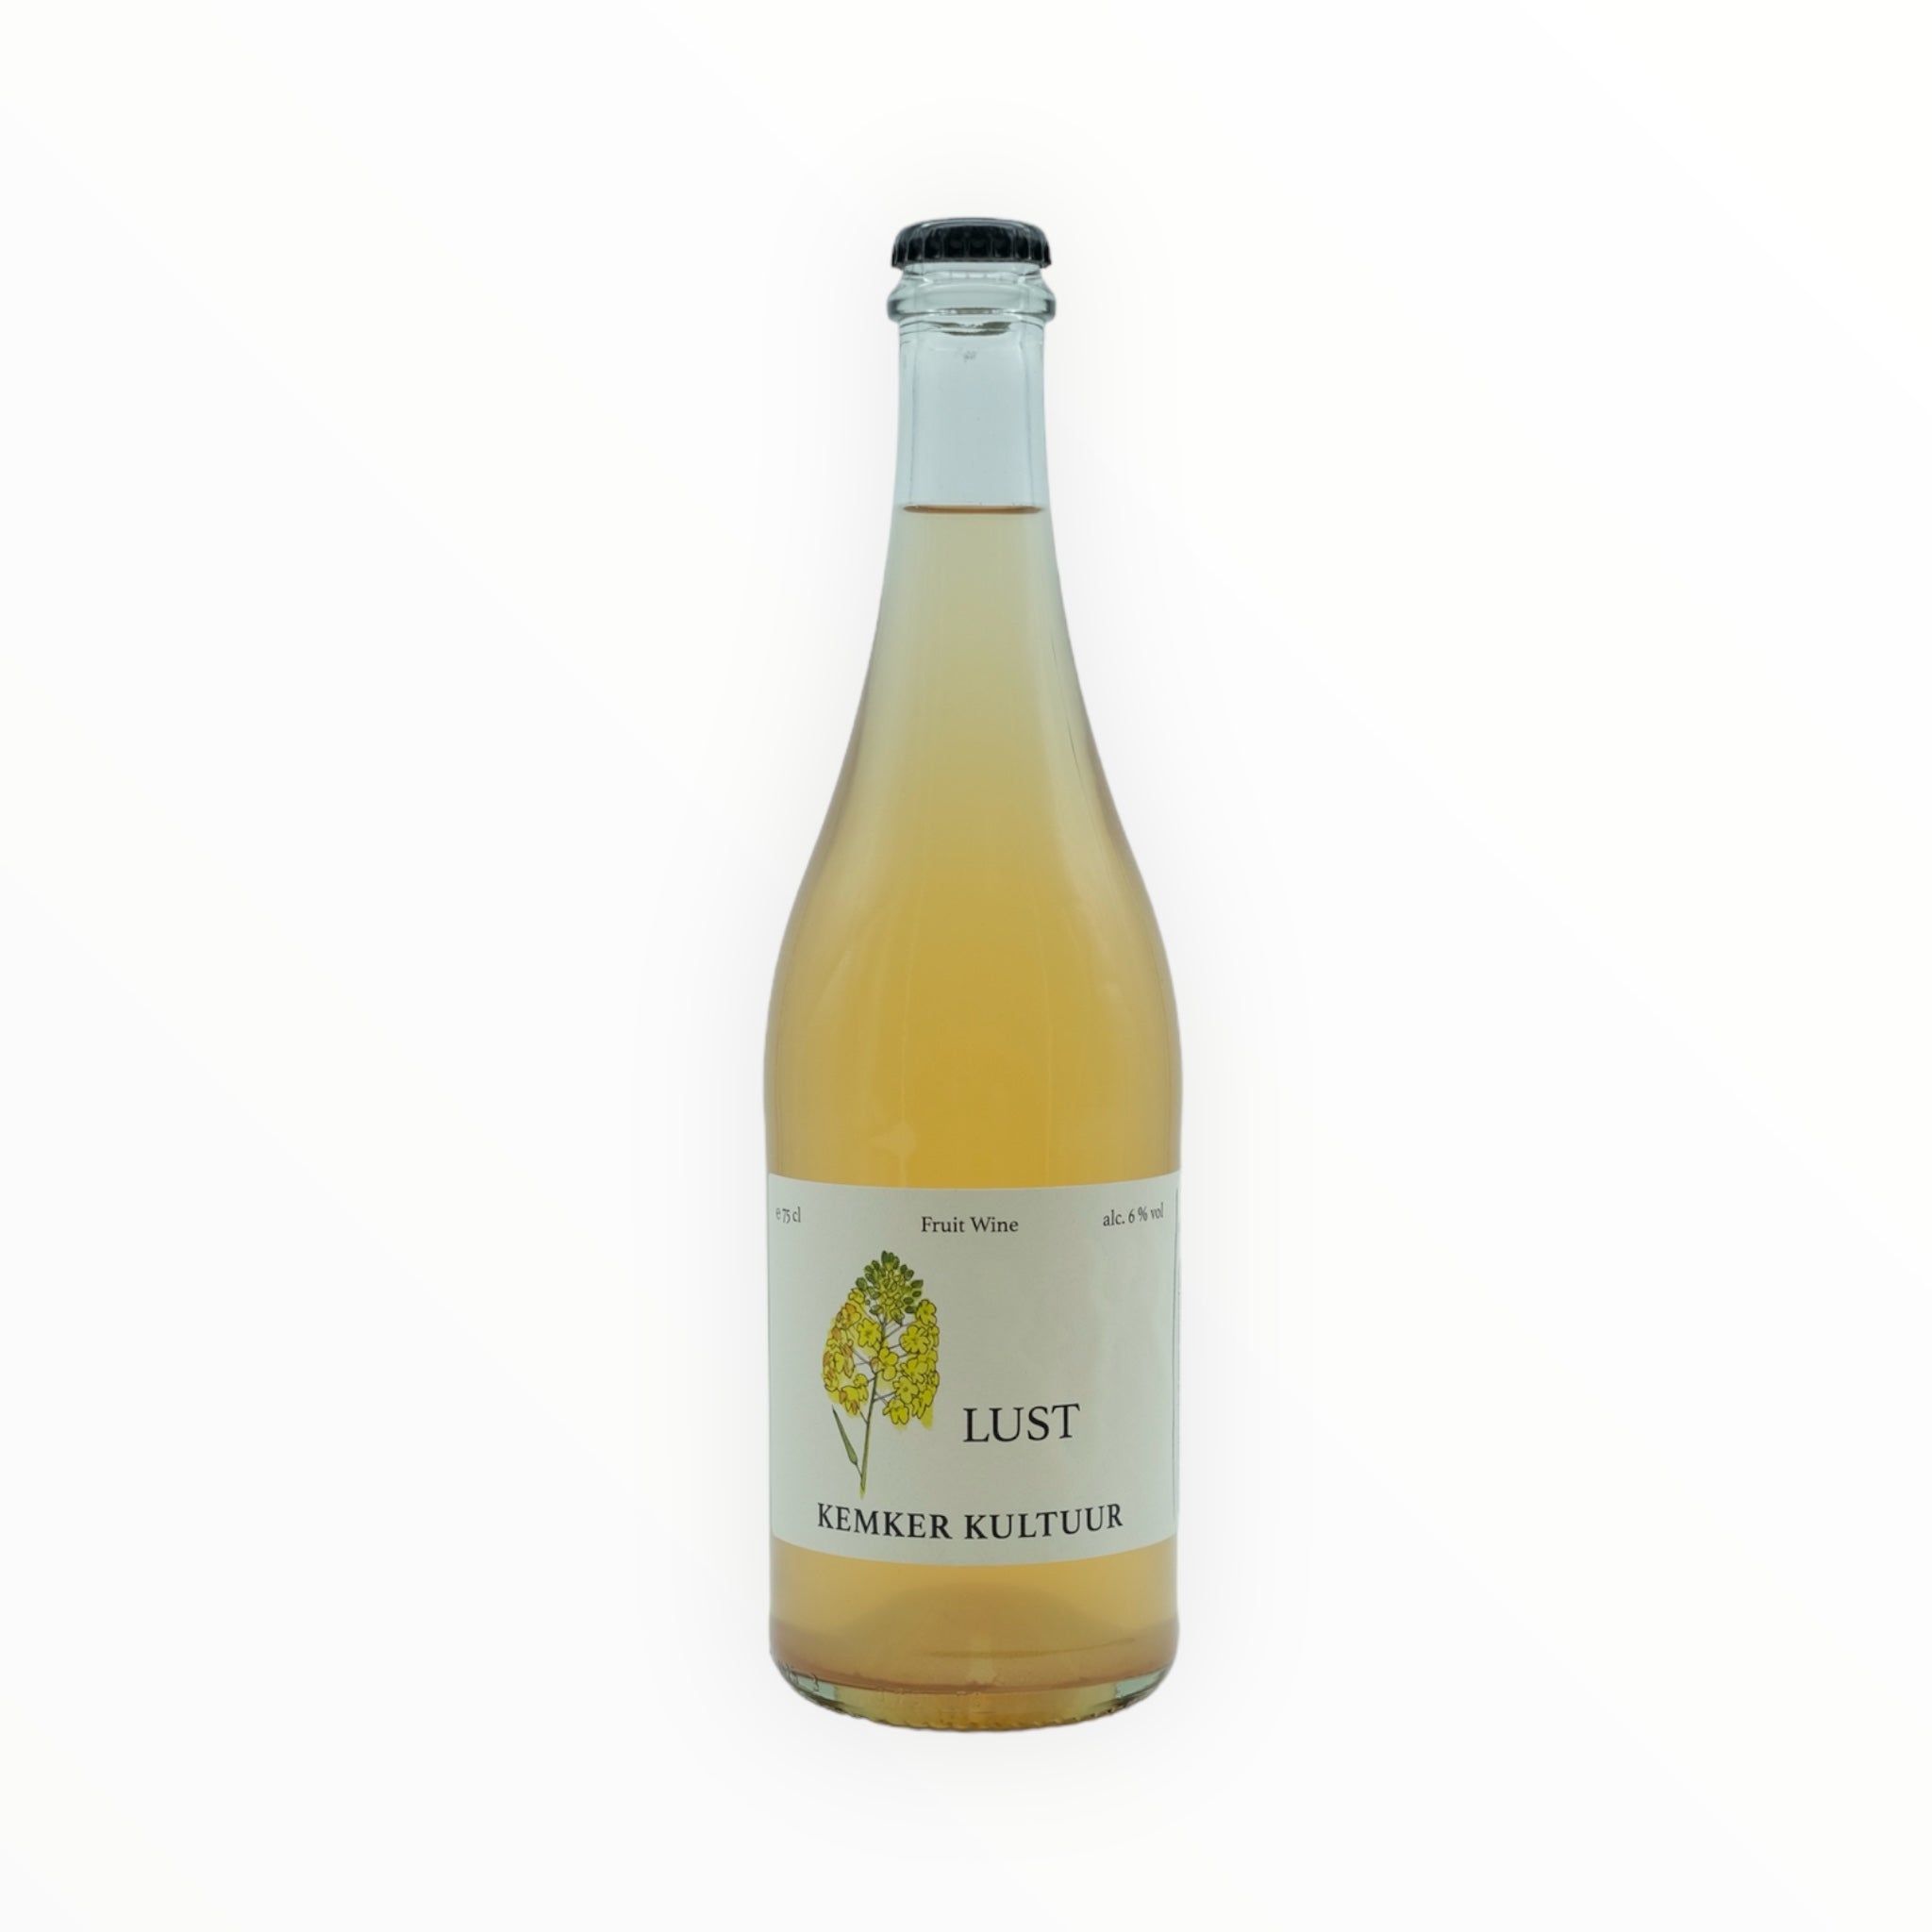 Brewery Kemker - Lust Quince/Aronia - Fluid Fruit